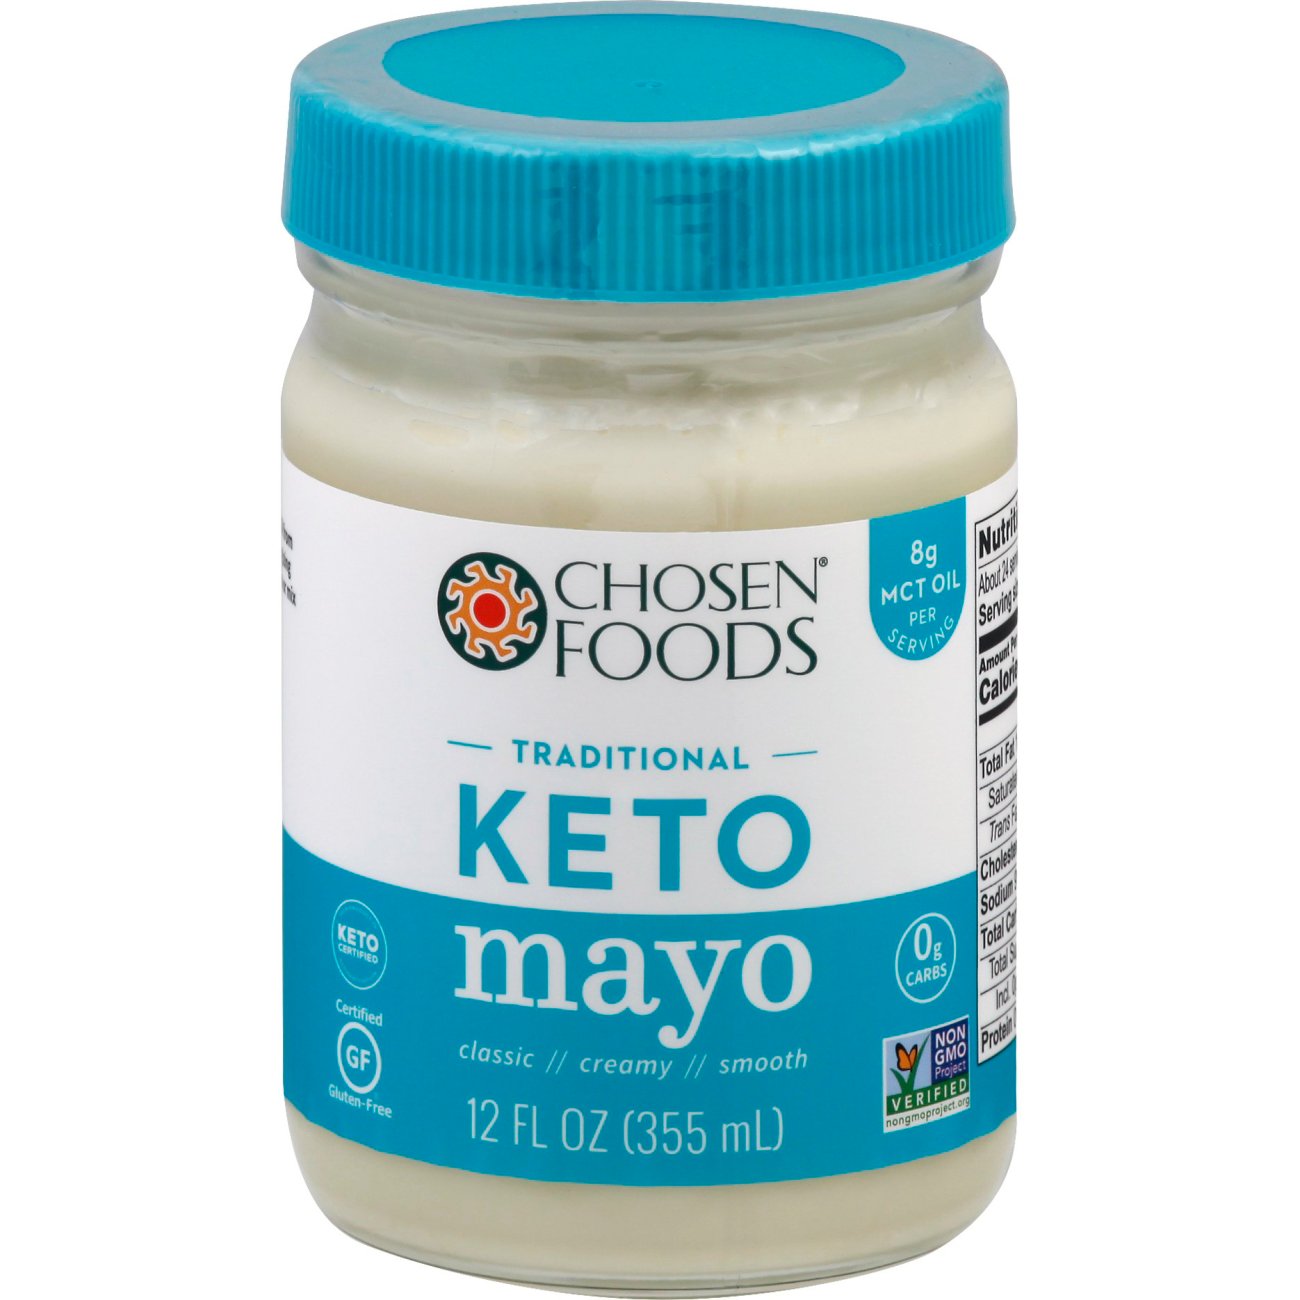 Chosen Foods Traditional Keto Mayo